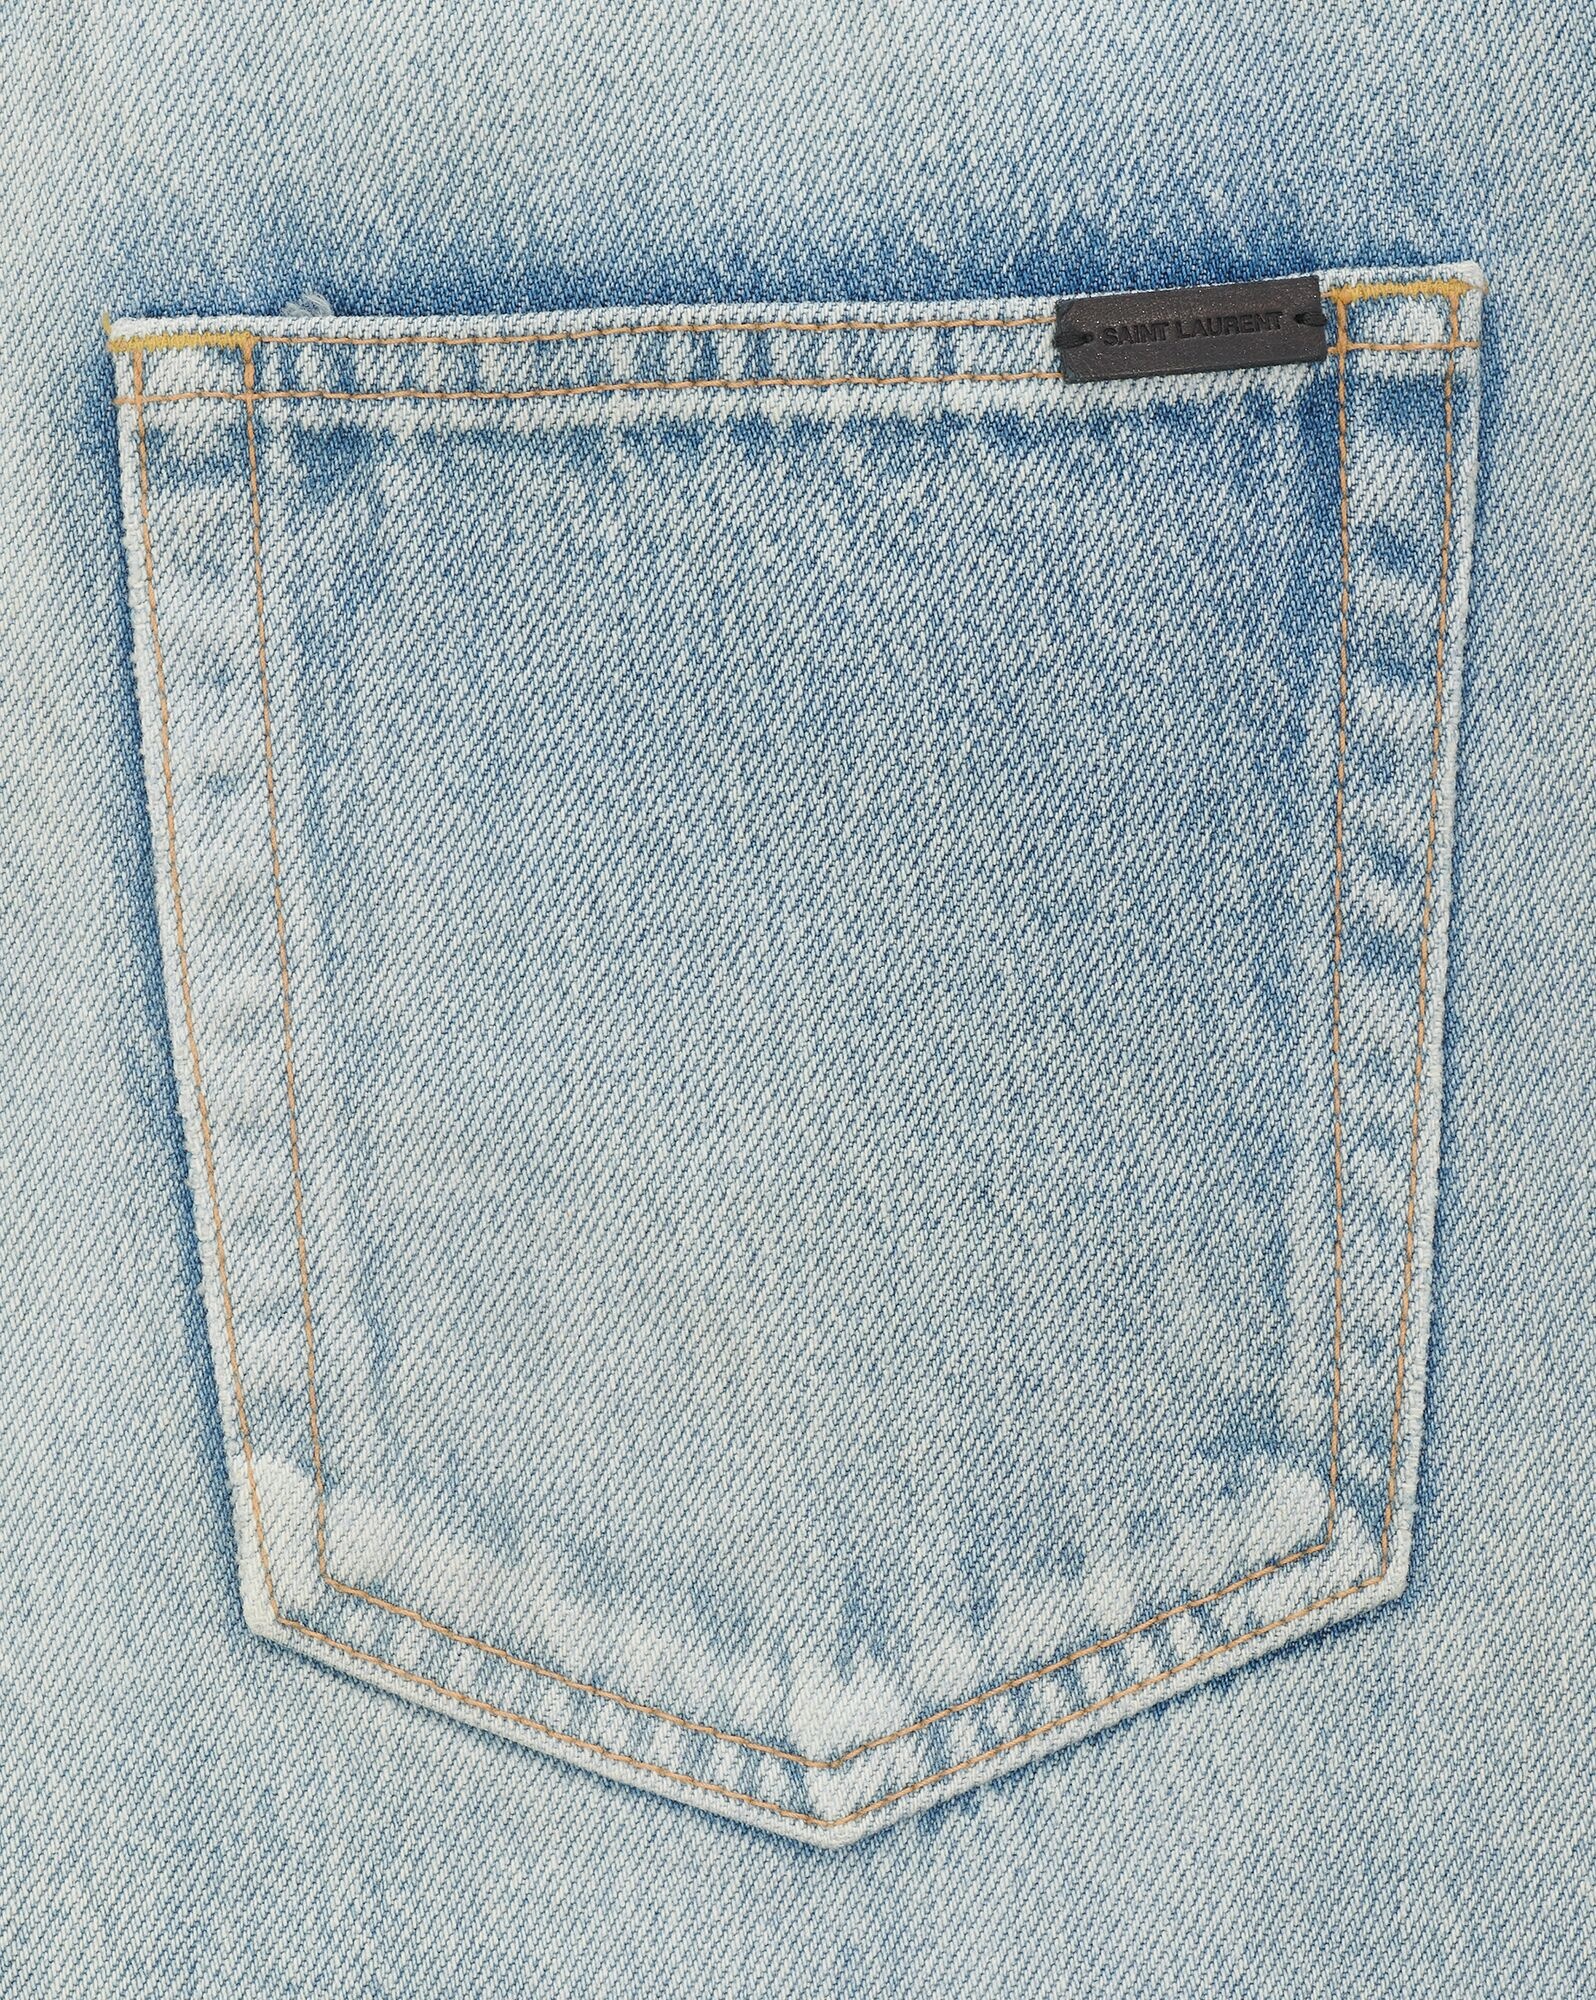 slim-fit jeans in santa monica blue denim - 4